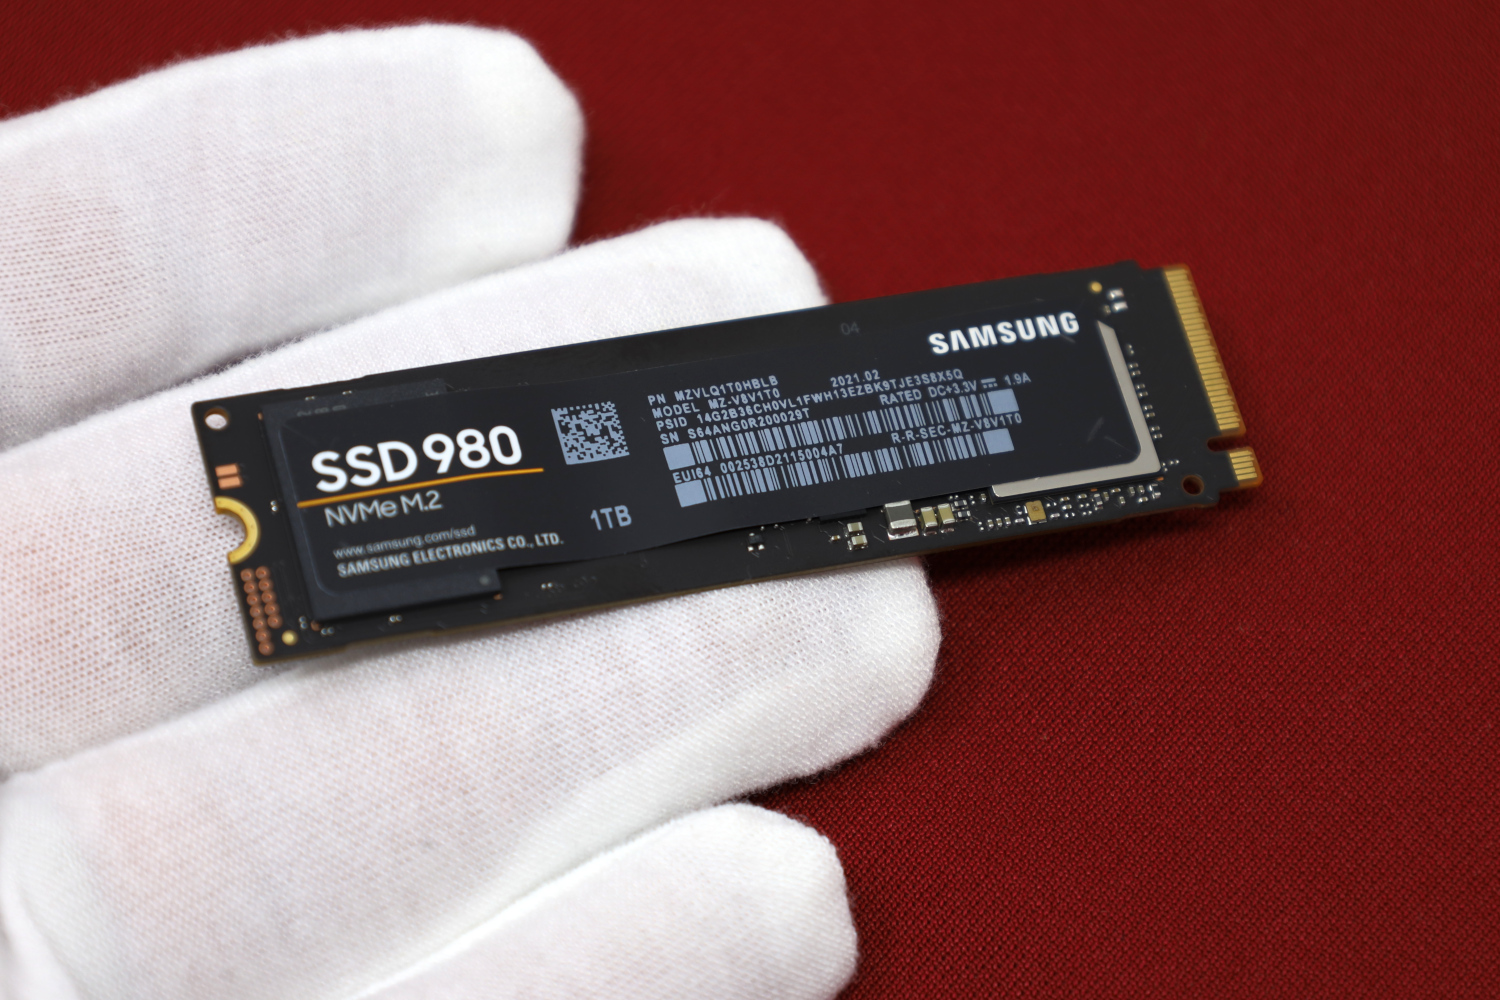 Ssd накопитель samsung 980 m 2 2280. SSD m2 Samsung 980 EVO Plus 1tb. SSD Samsung 980 1tb. SSD m2 NVME 1tb Samsung 980. Samsung SSD 980 NVME 1tb.